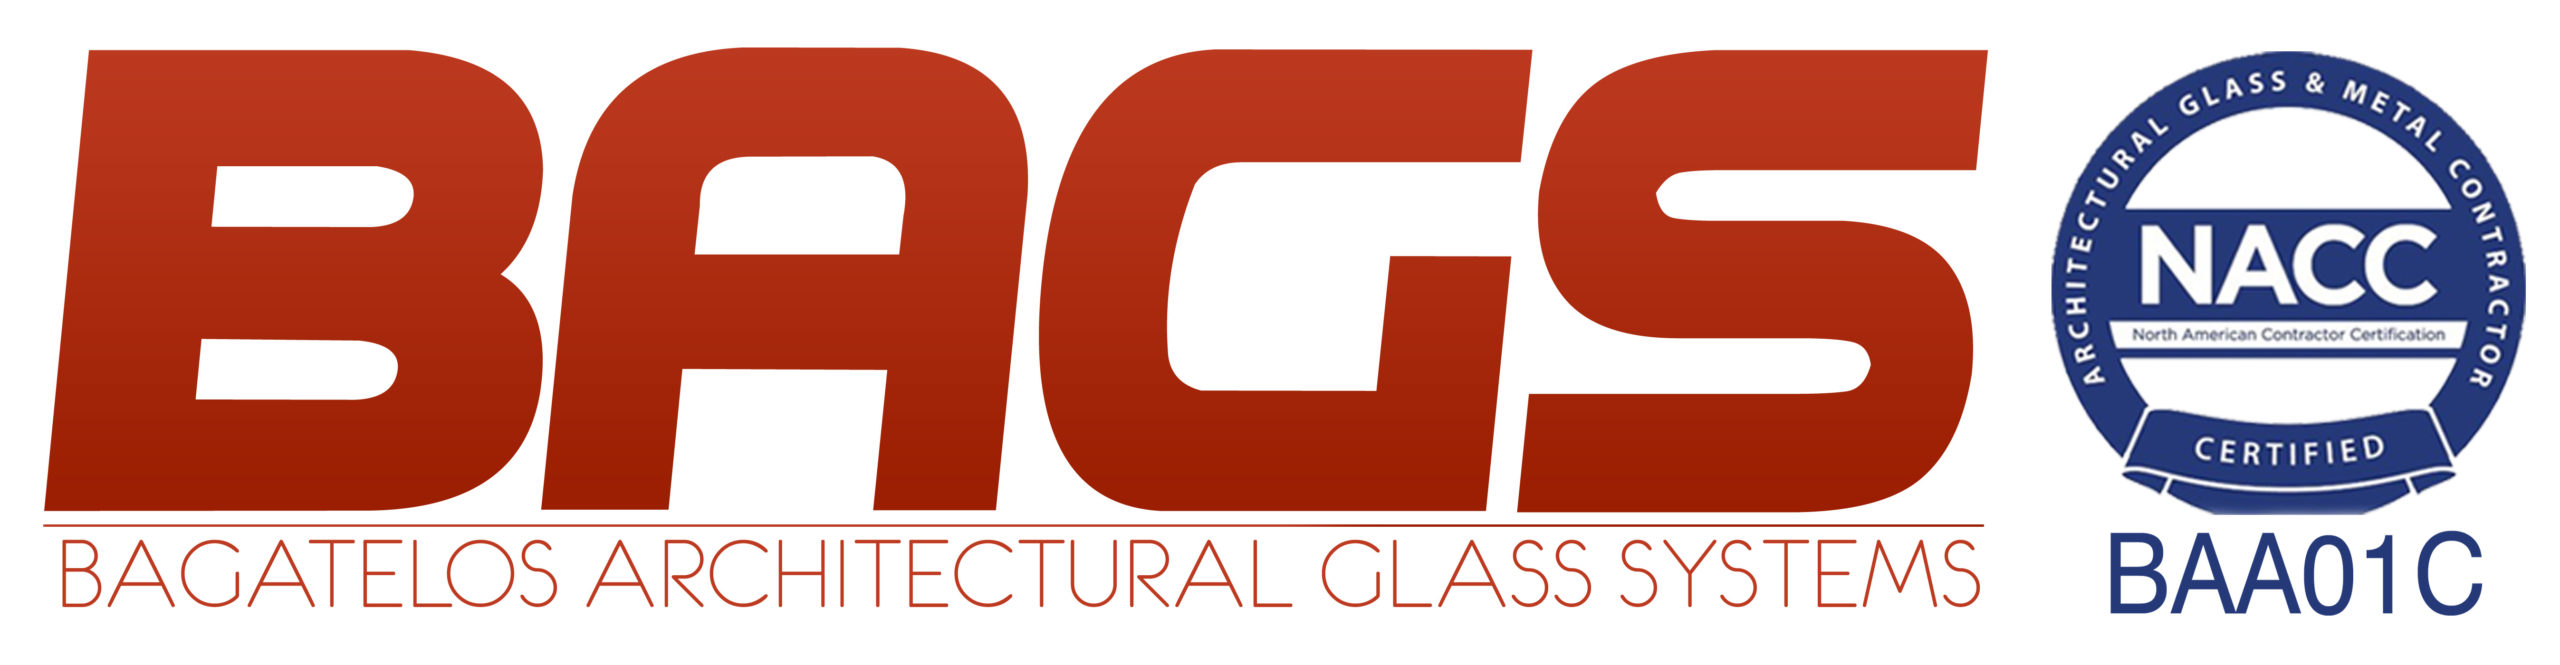 Bagatelos Glass Systems, Inc Logo